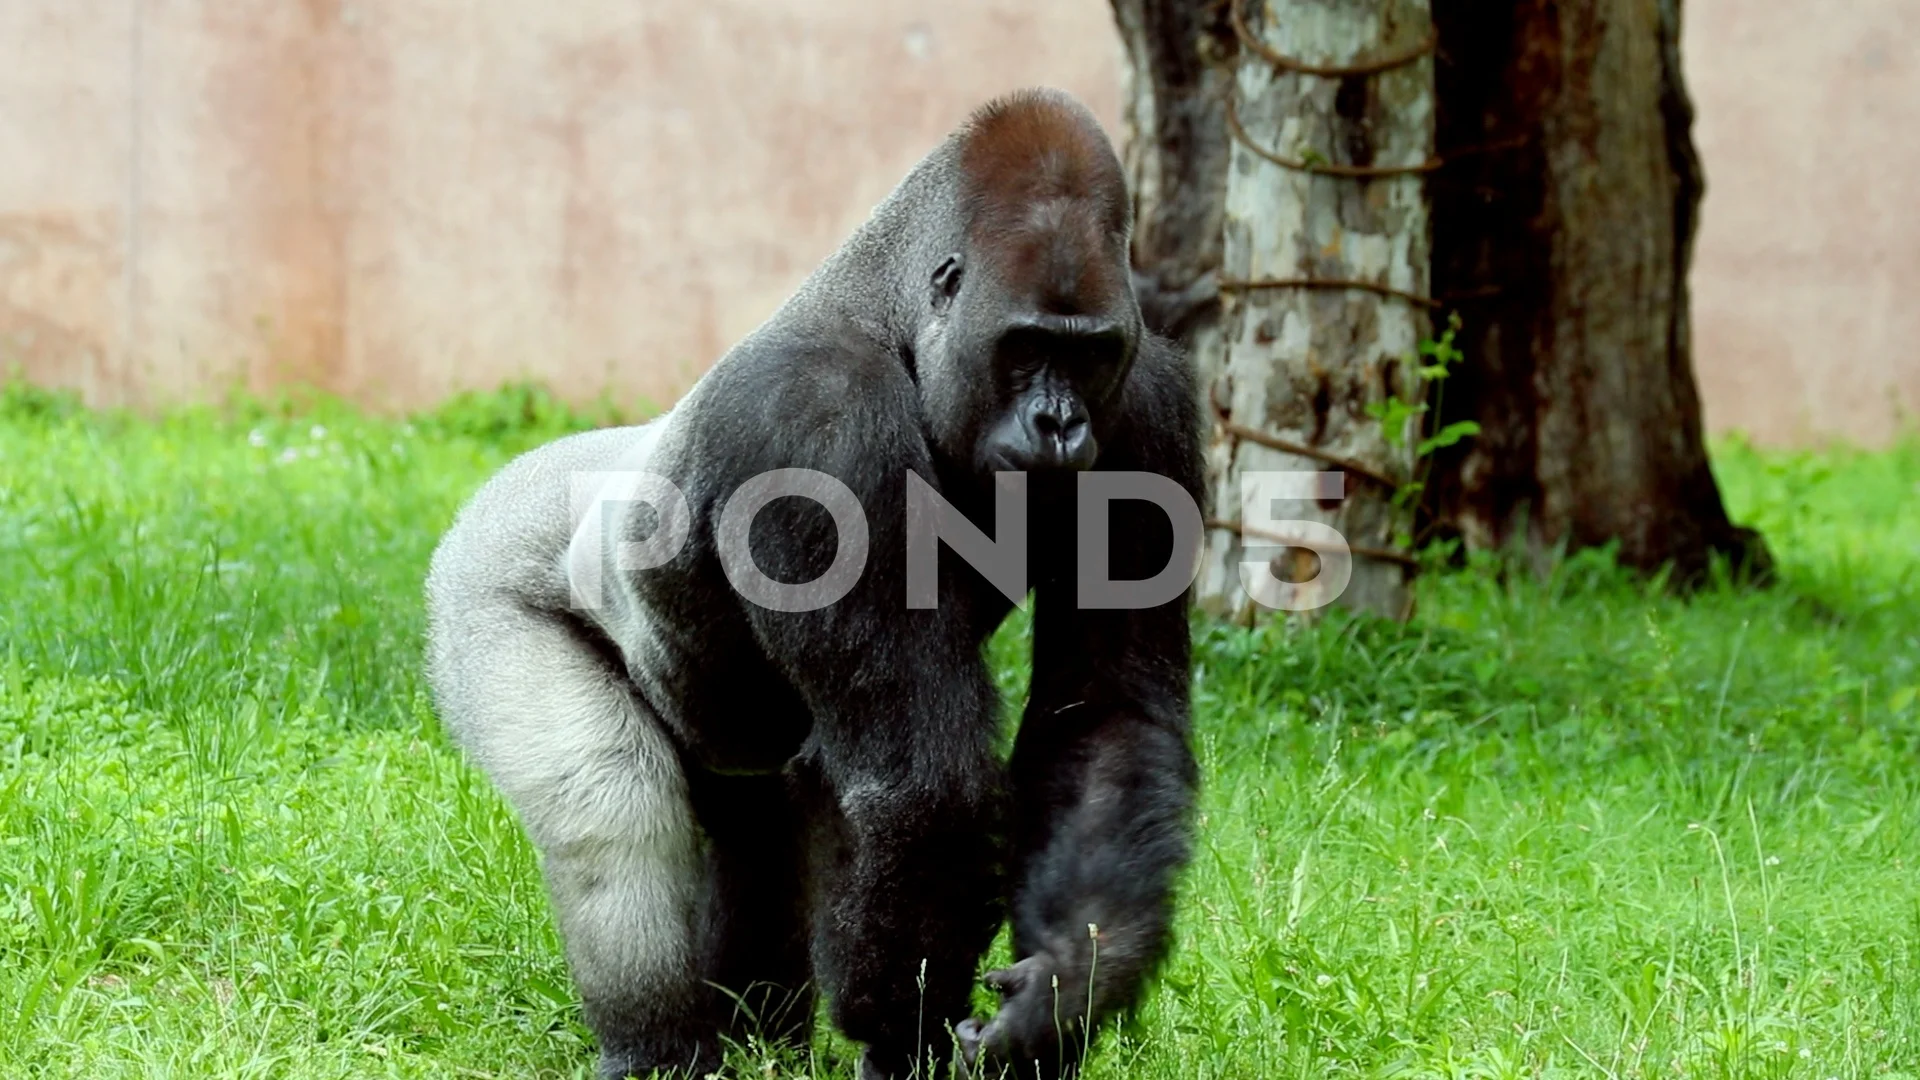 Rare Encounter: Park Ranger Bonds with Gorillas in National Park